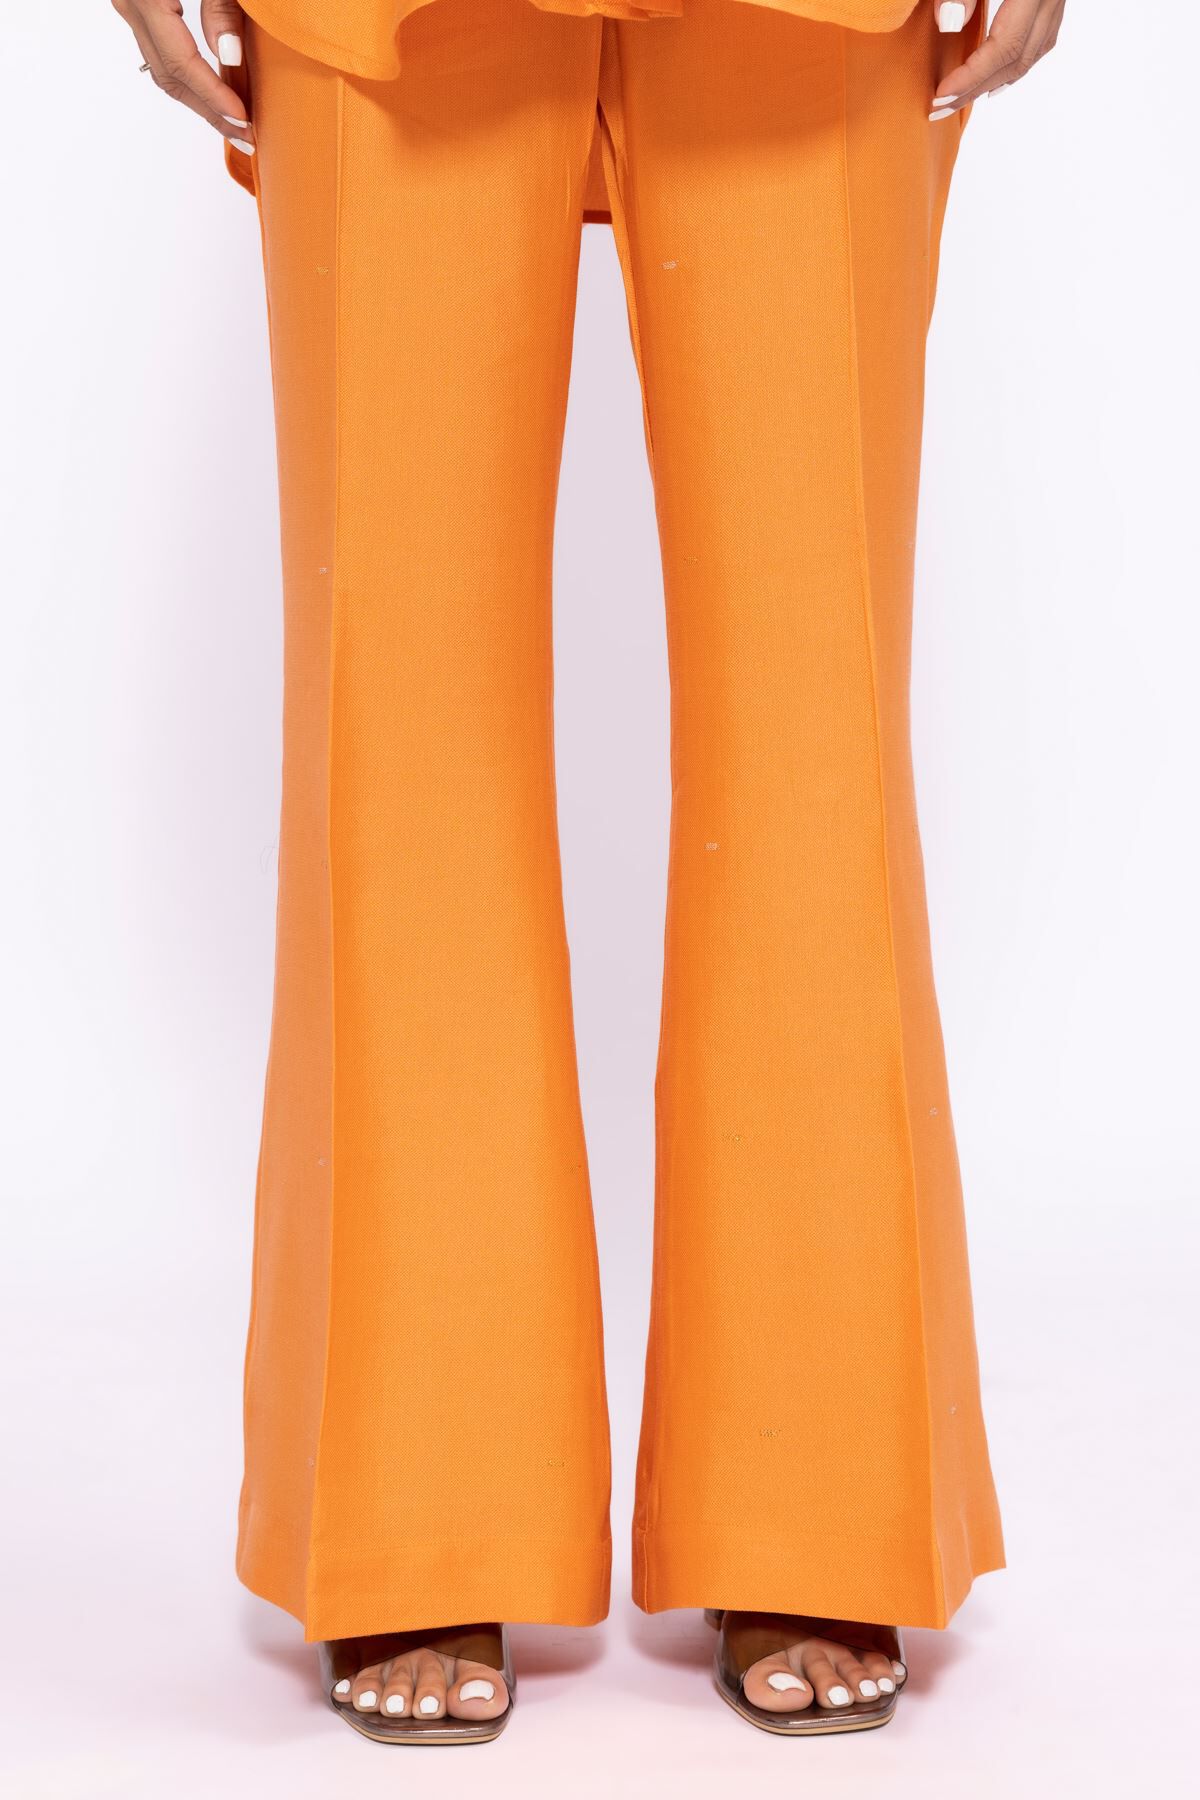 Khaadi Women039s Trousers UK 8 Black 100 Cotton  eBay